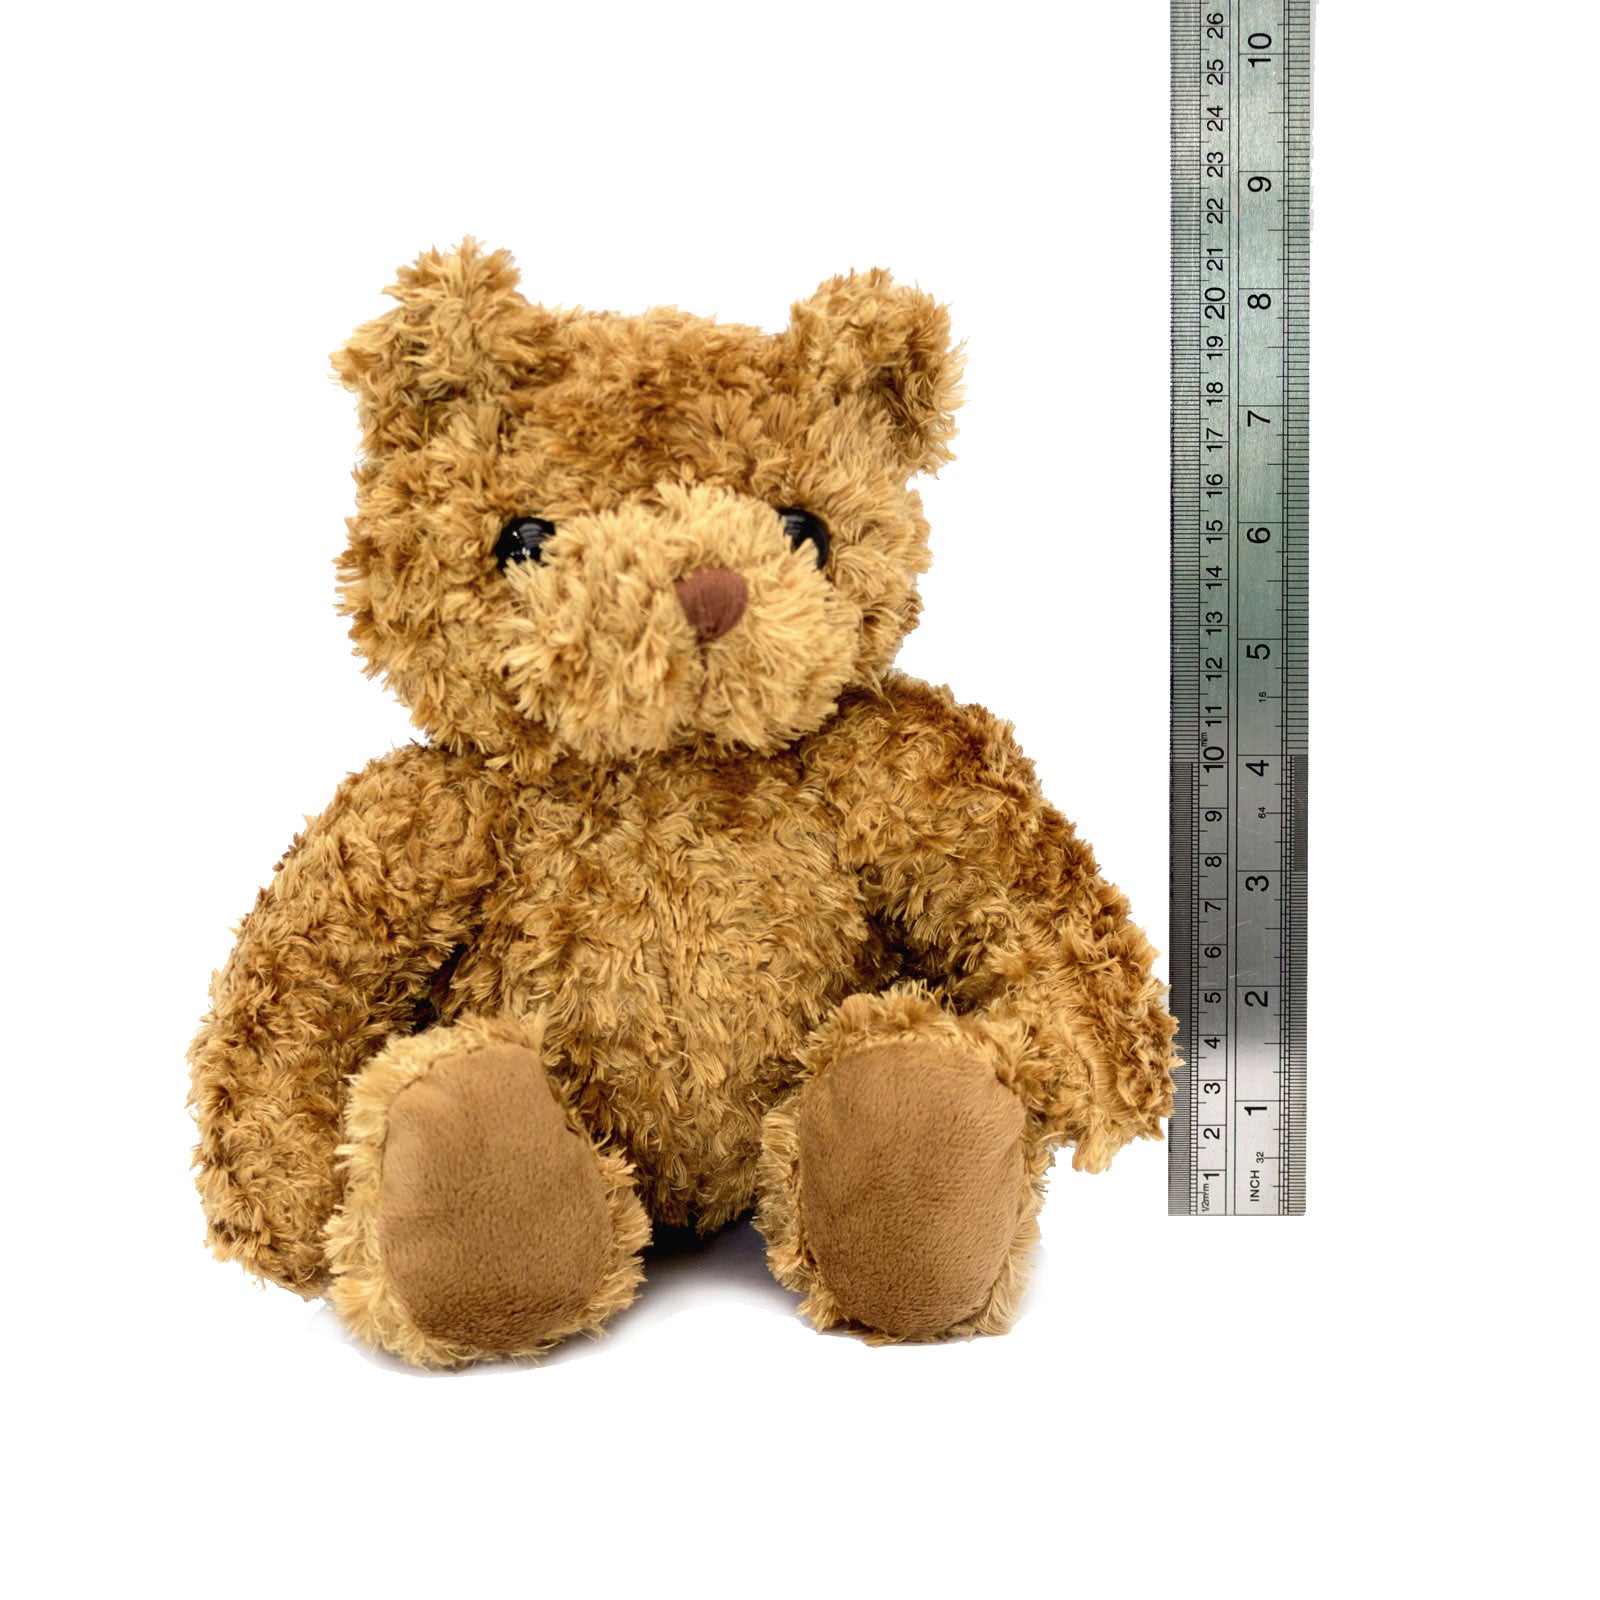 Get Well Soon Jean-Claude - Teddy Bear